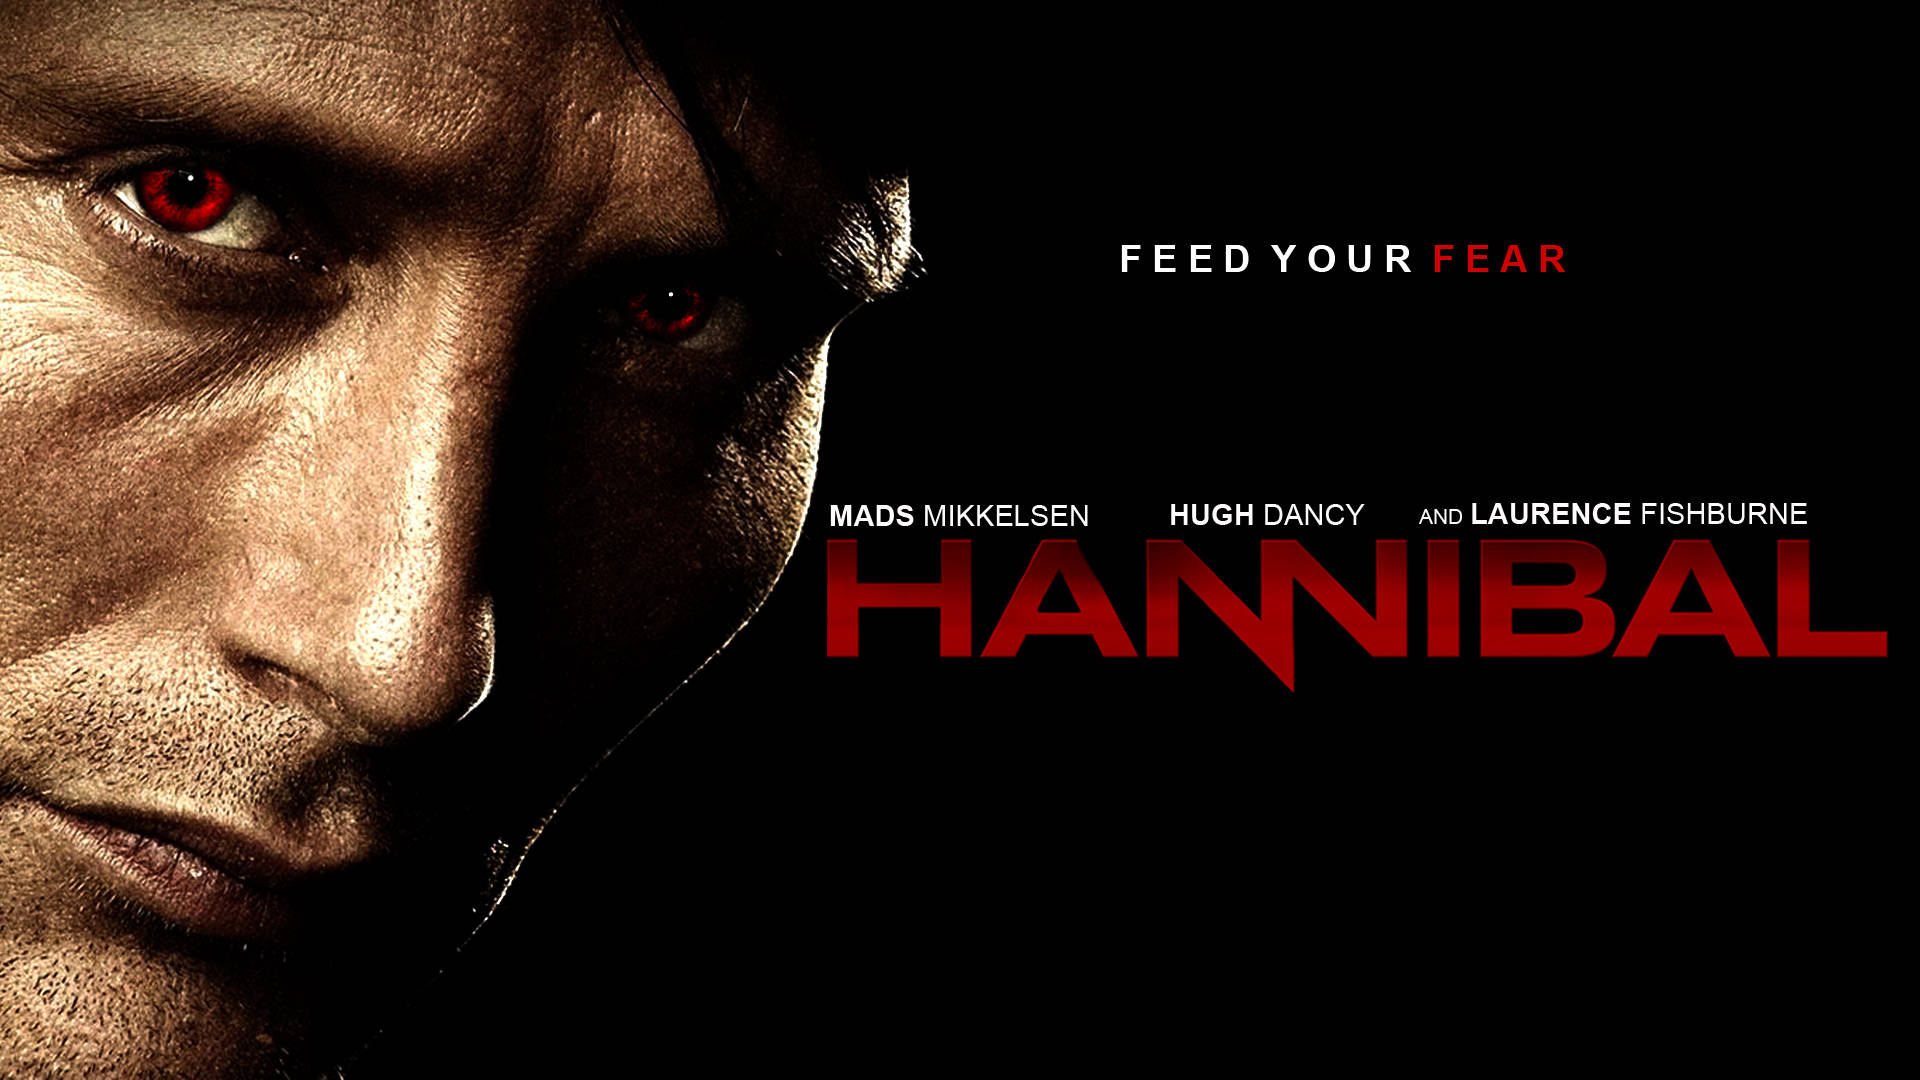 Hannibal Feed Your Fear